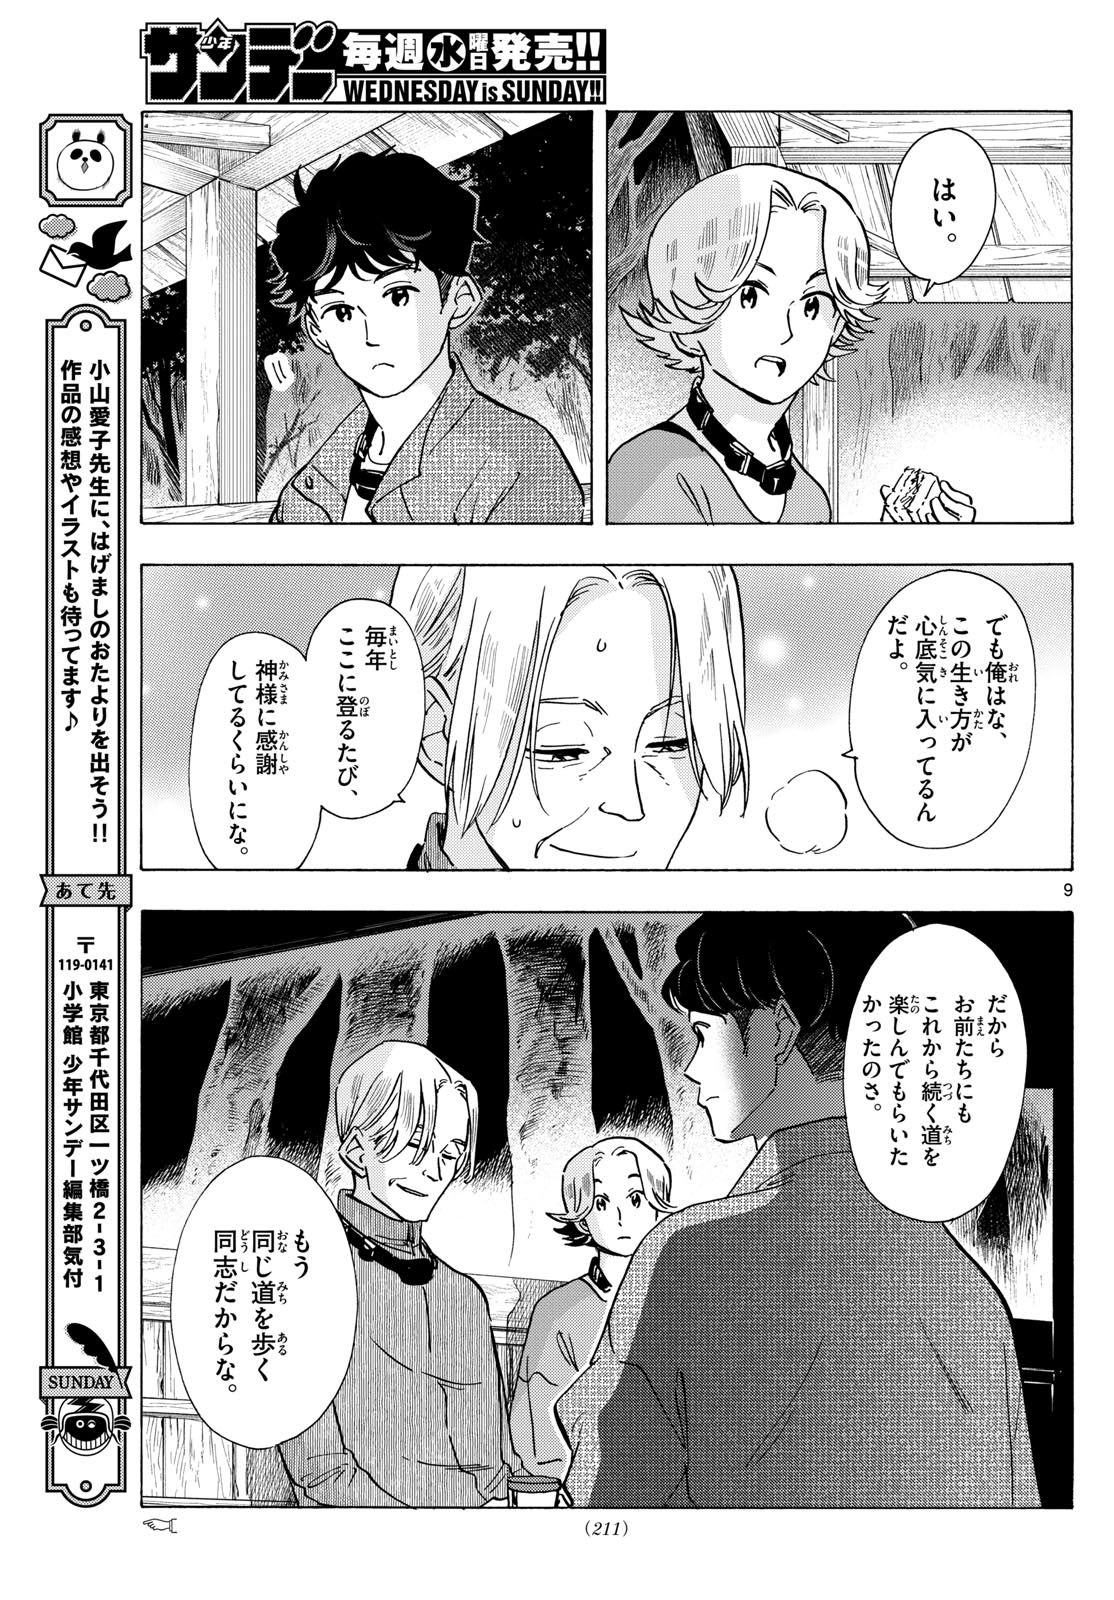 Maiko-san Chi no Makanai-san - Chapter 295 - Page 9